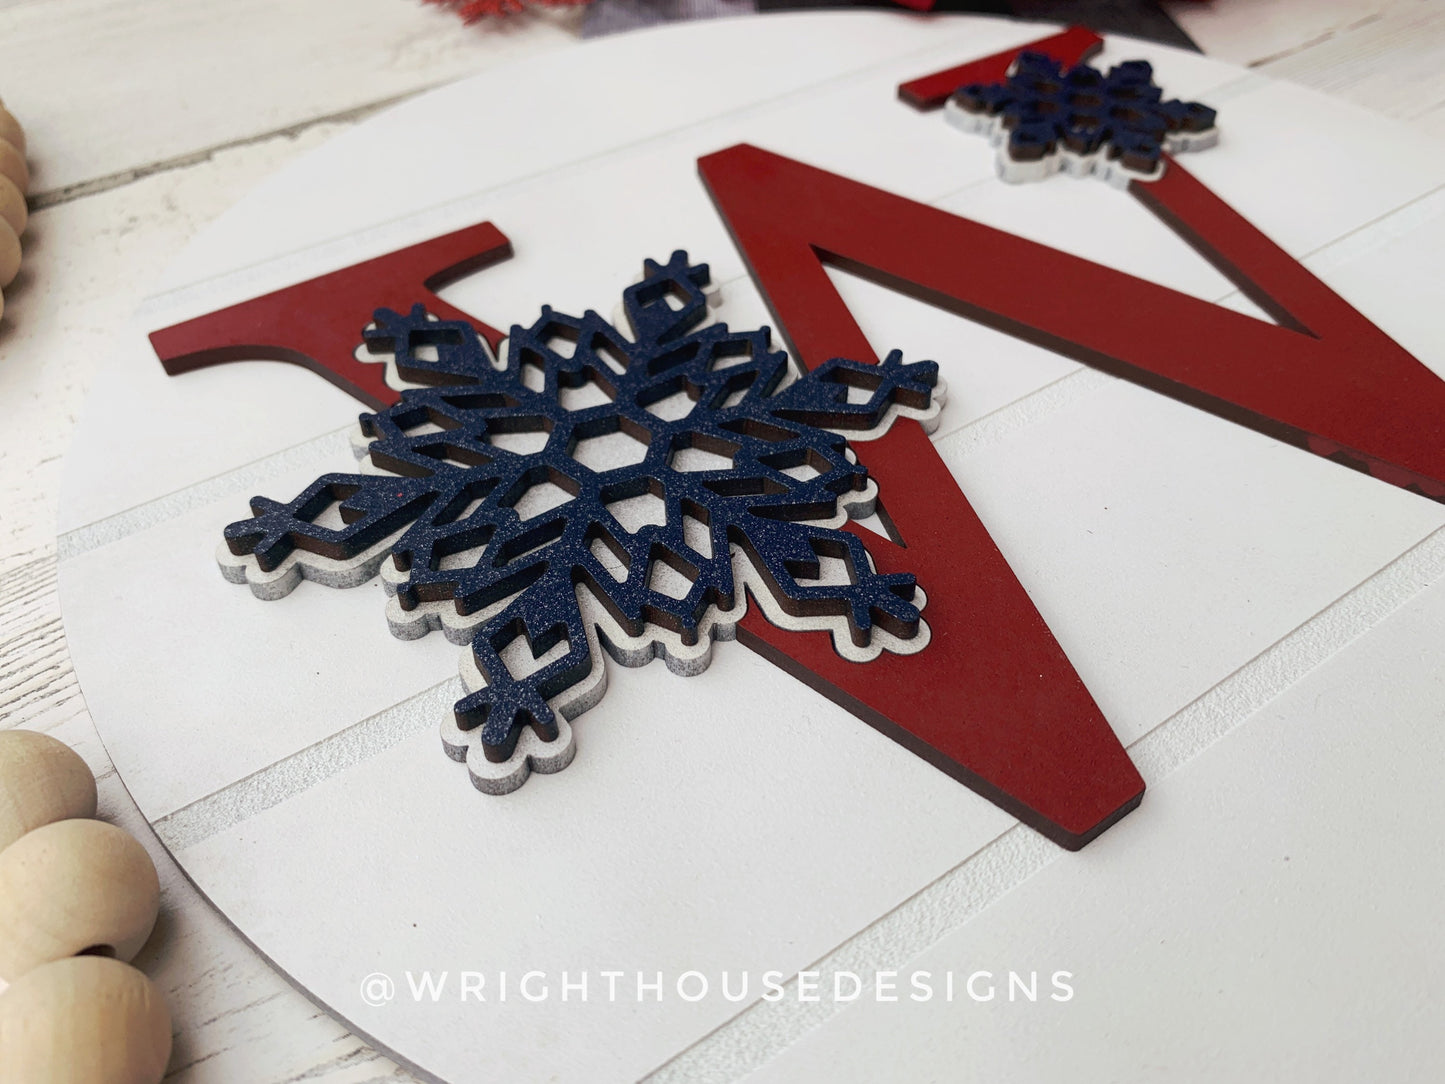 Winter Snowflake Personalized Monogram Family Name - Laser Cut Wooden Shiplap Round Sign - Rustic Farmhouse - Southern Style Bookshelf Decor